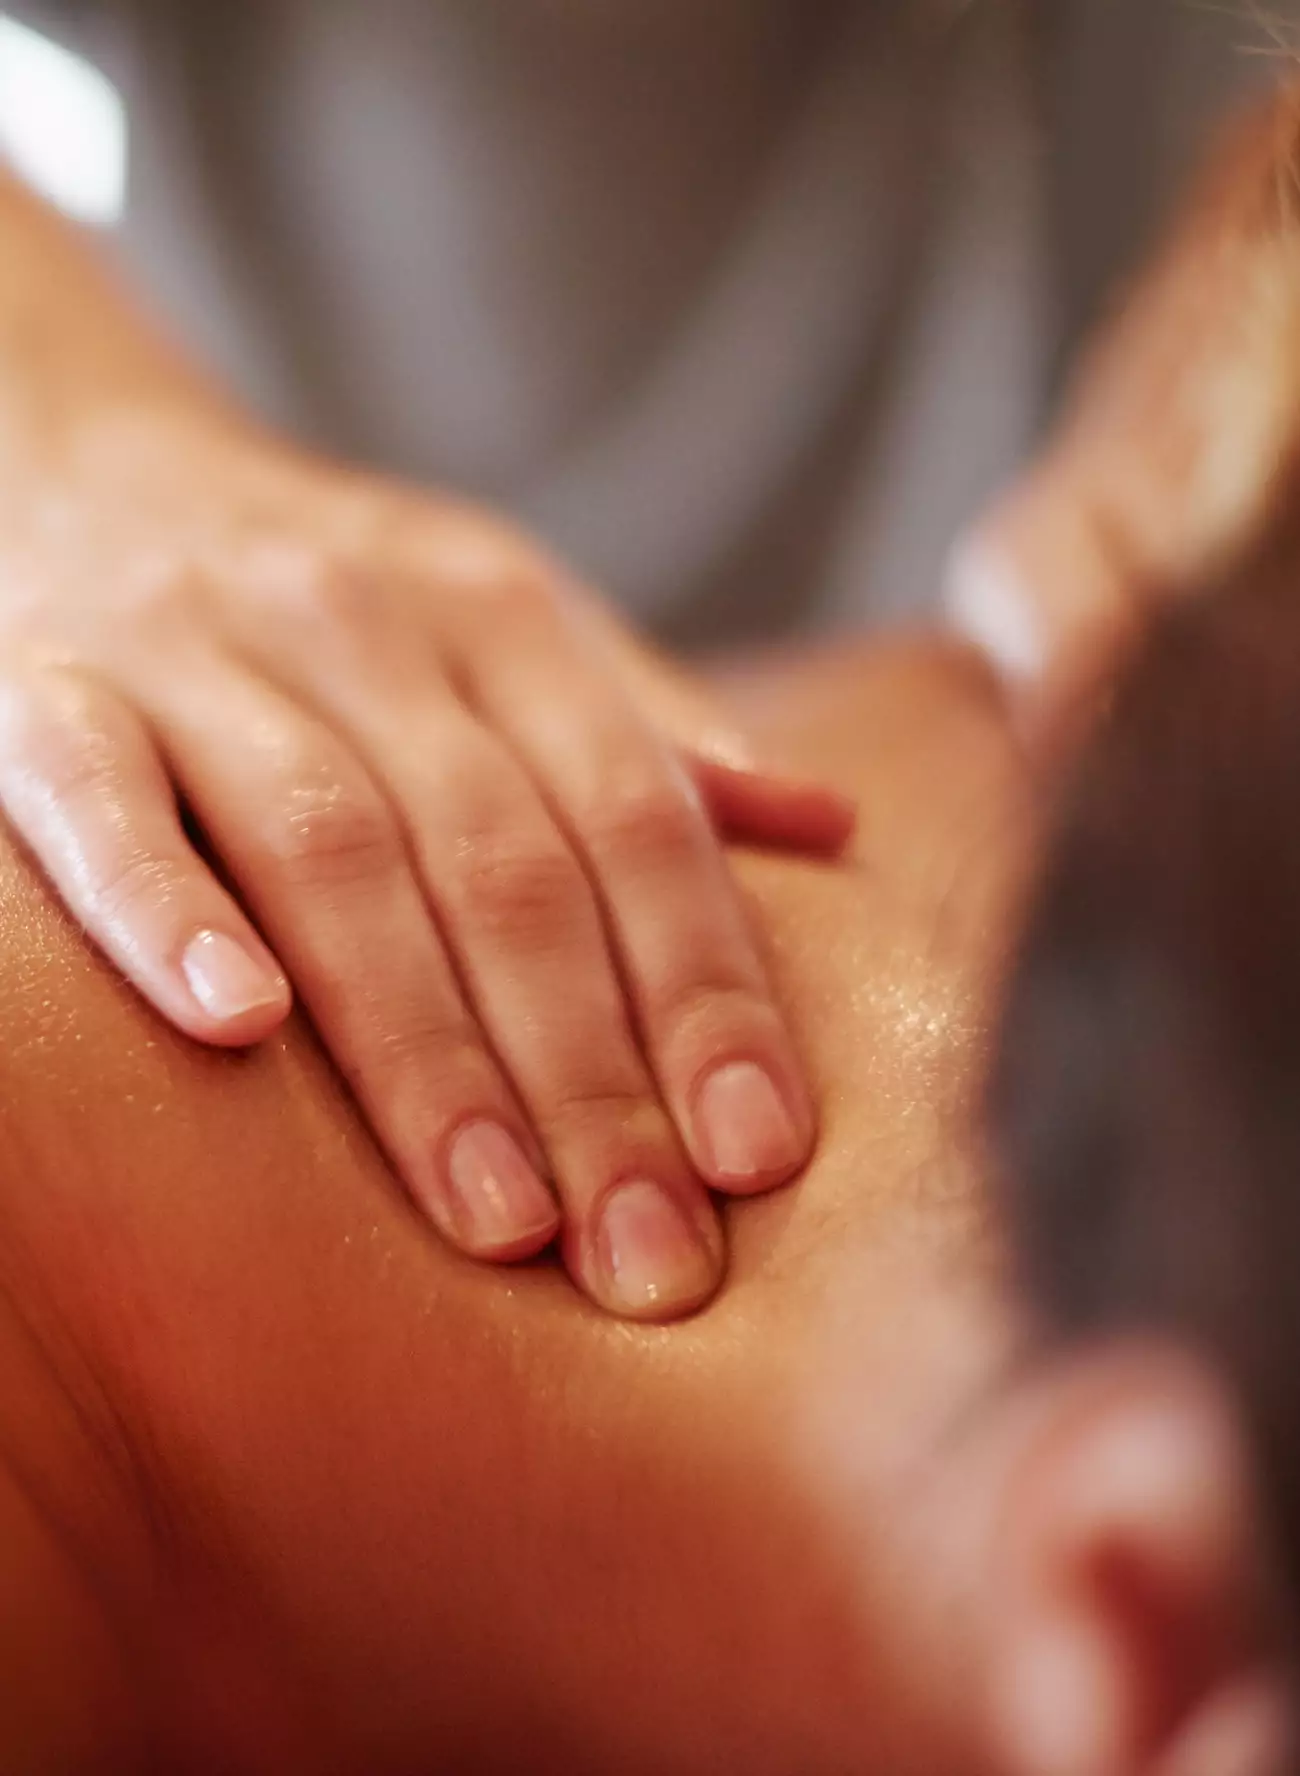 Therapist hand providing massage on upper shoulder and neck